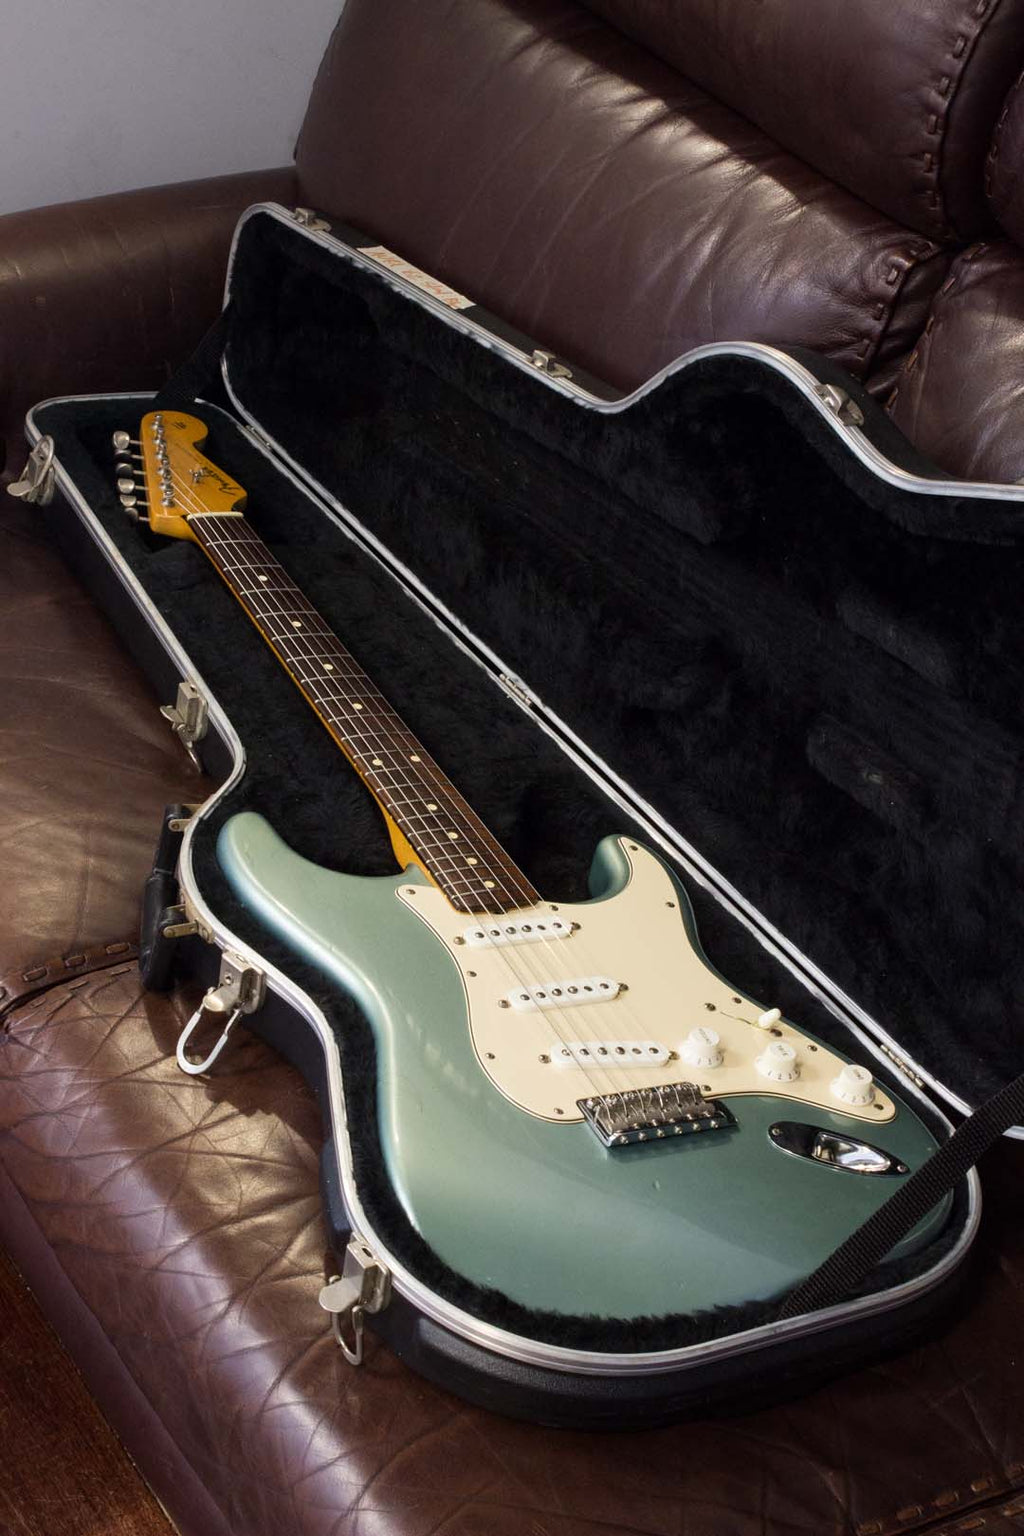 Fender American Vintage '62 Stratocaster Ice Blue Metallic 2001